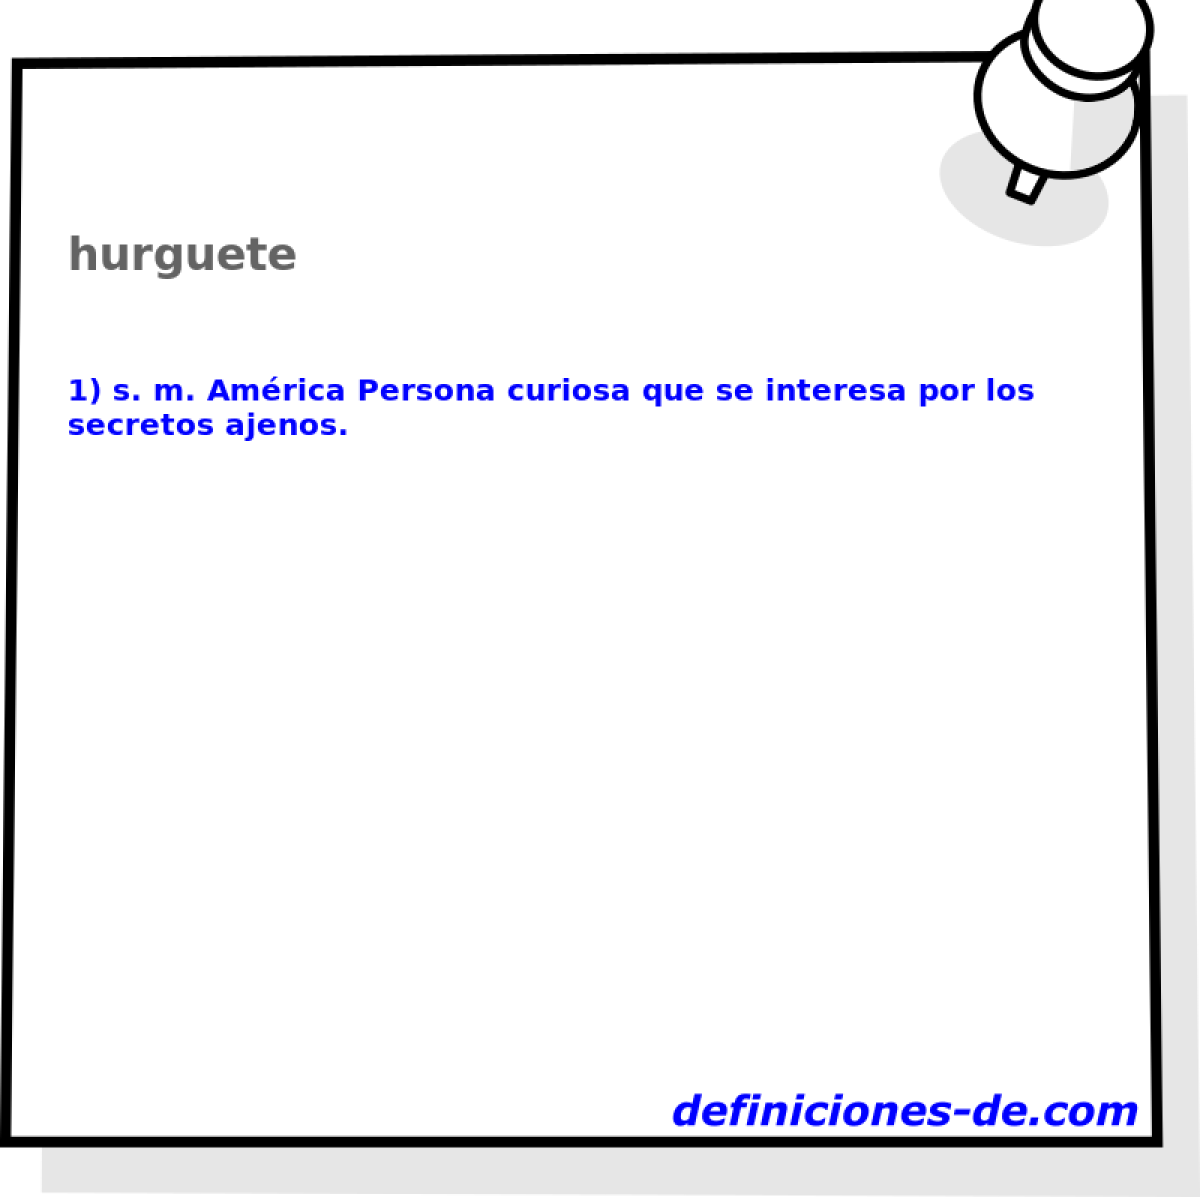 hurguete 